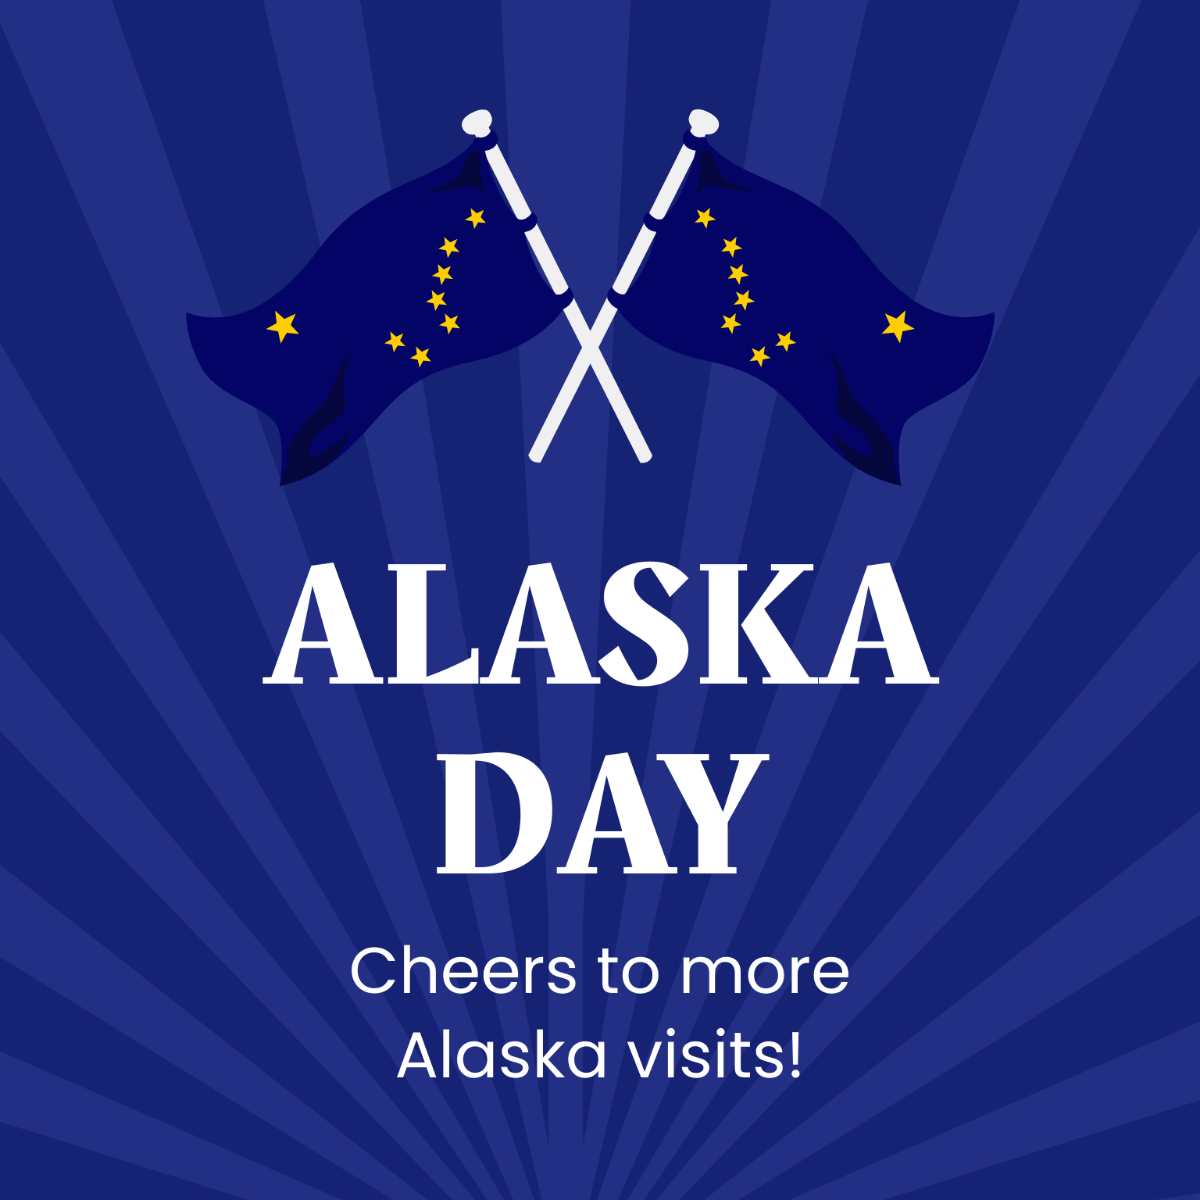 Alaska Day Poster Vector Template